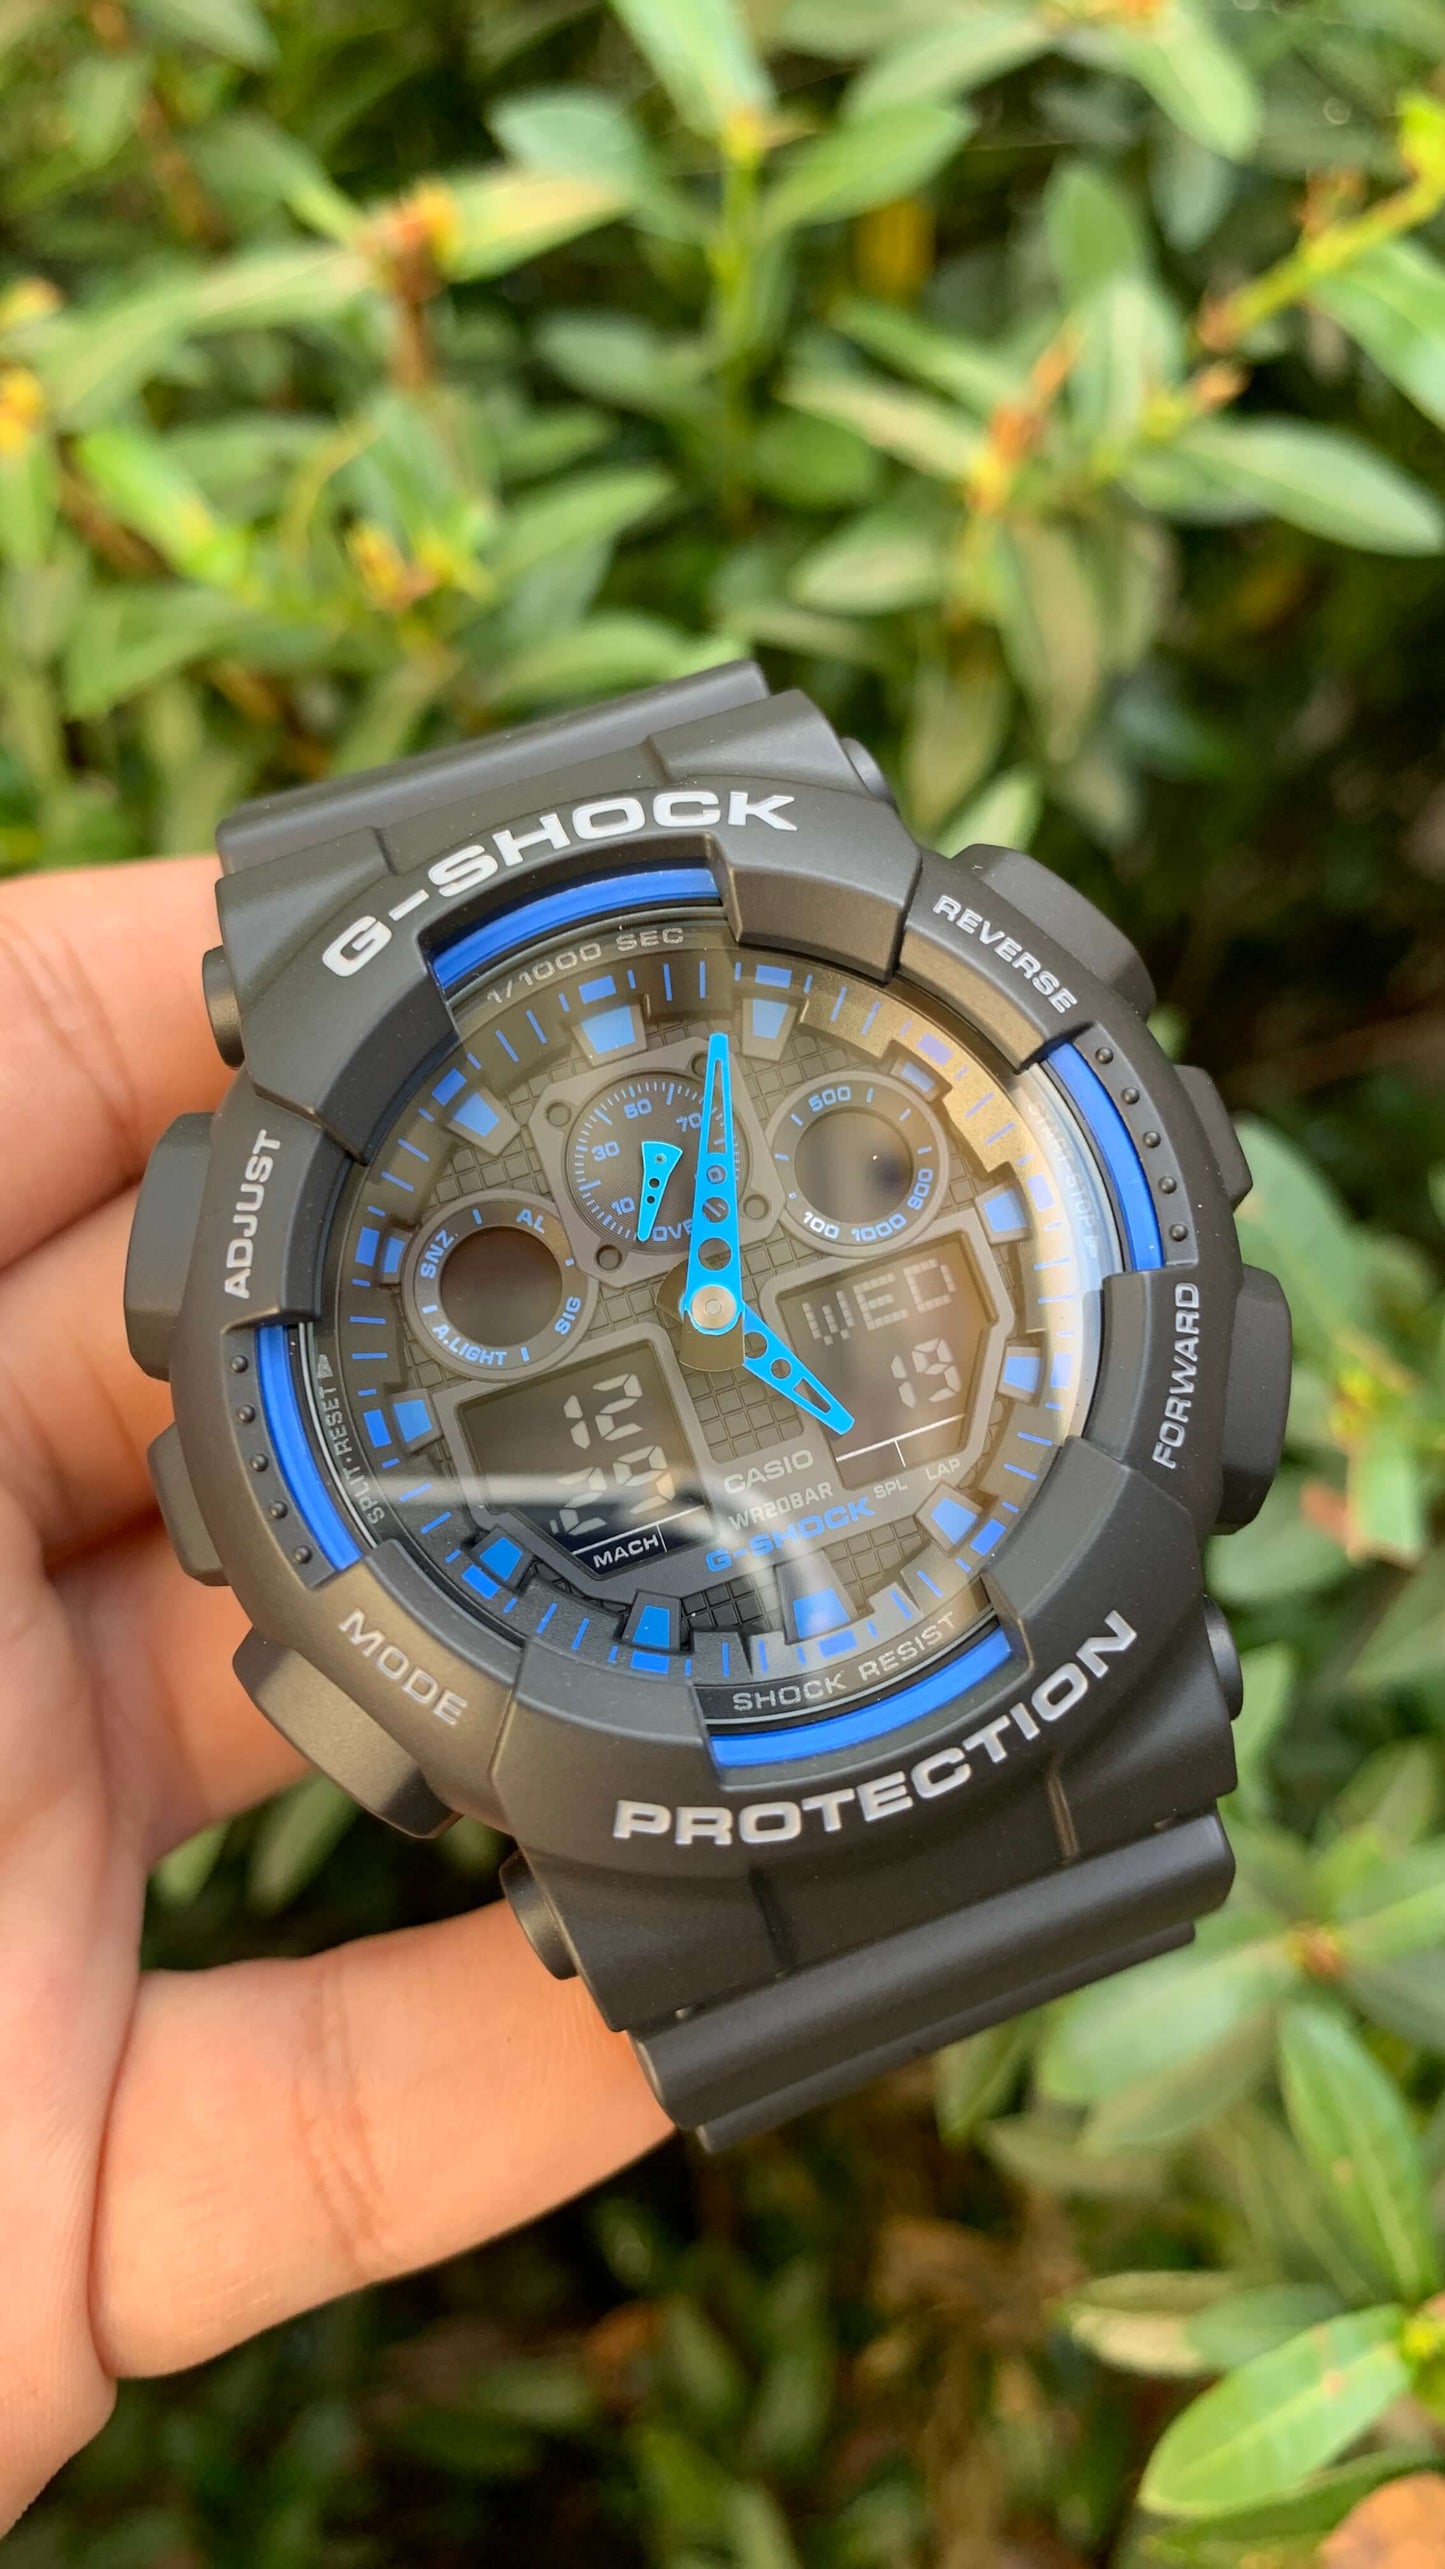 Casio G-Shock | Hombre | GA-100-1A2CR /RMGS43